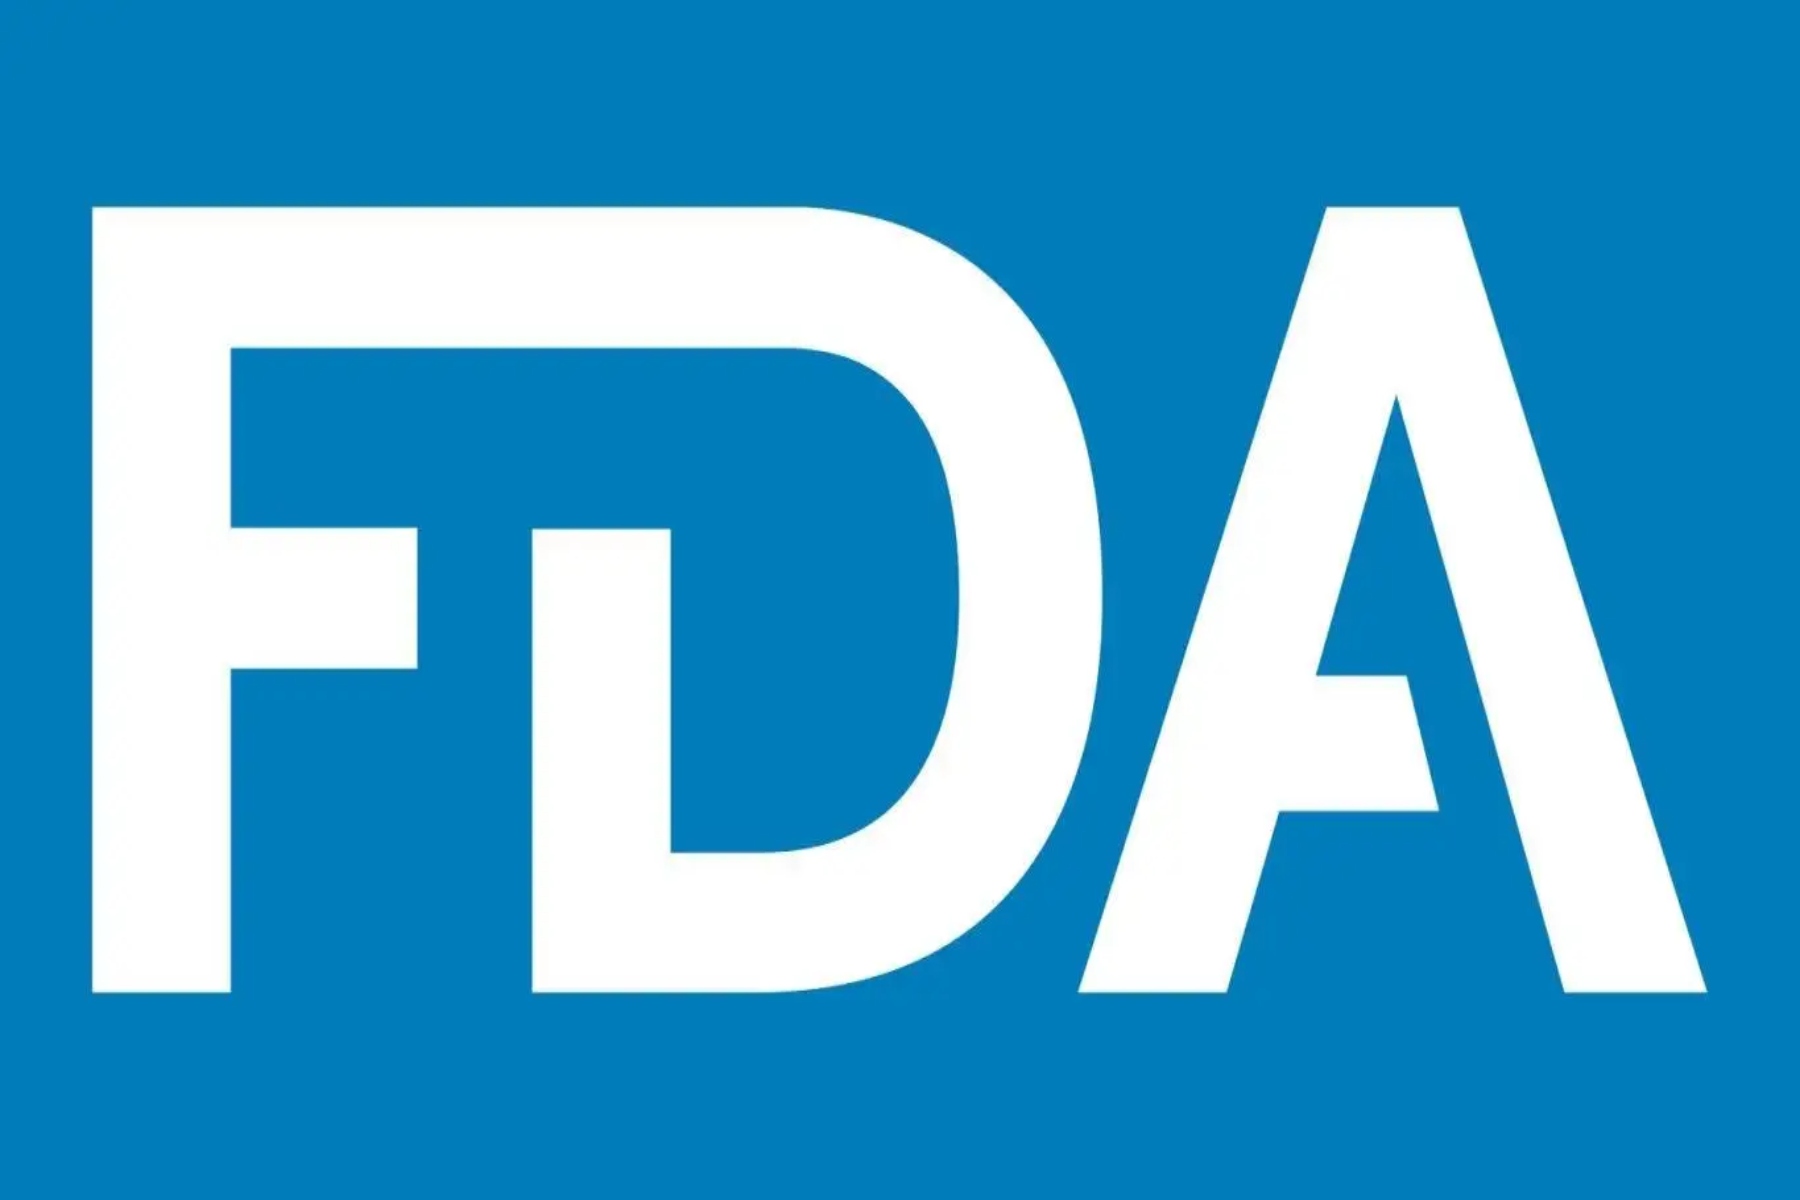 FDA: Ζητάει χρήματα για την προστασία και προώθηση της δημόσιας υγείας